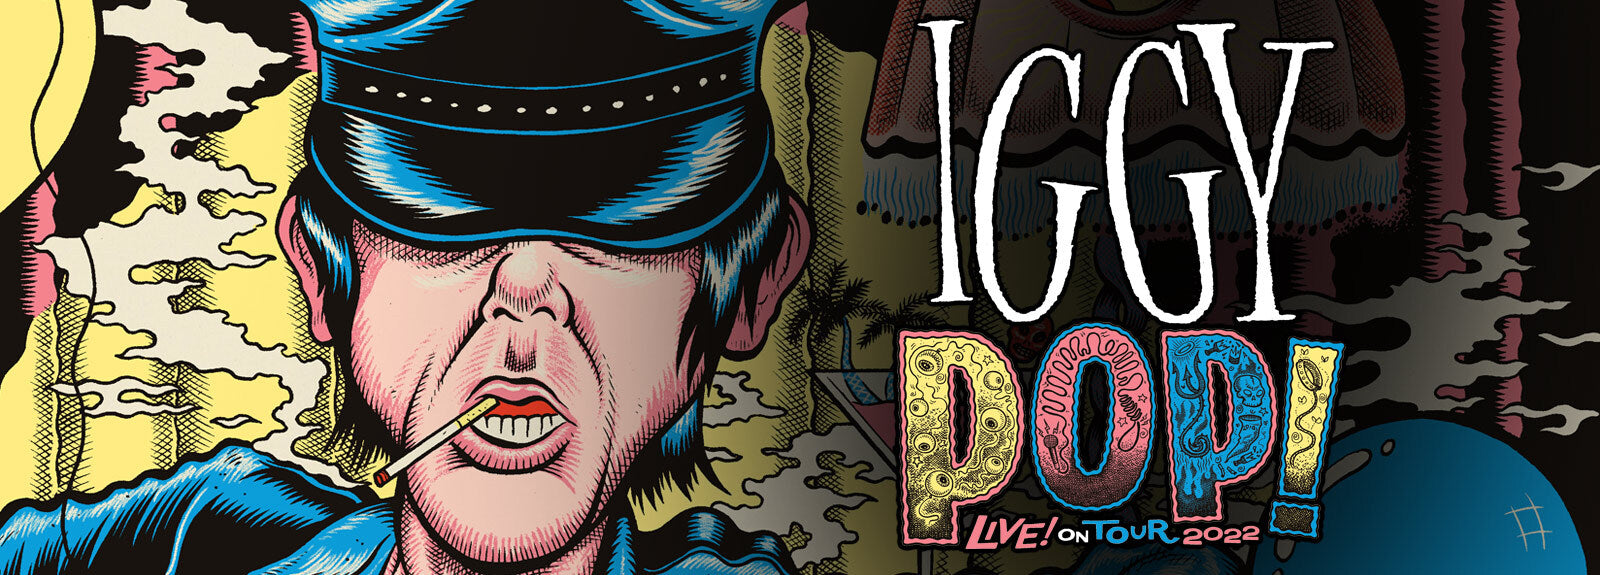 Iggy Pop Live on Tour 2022!